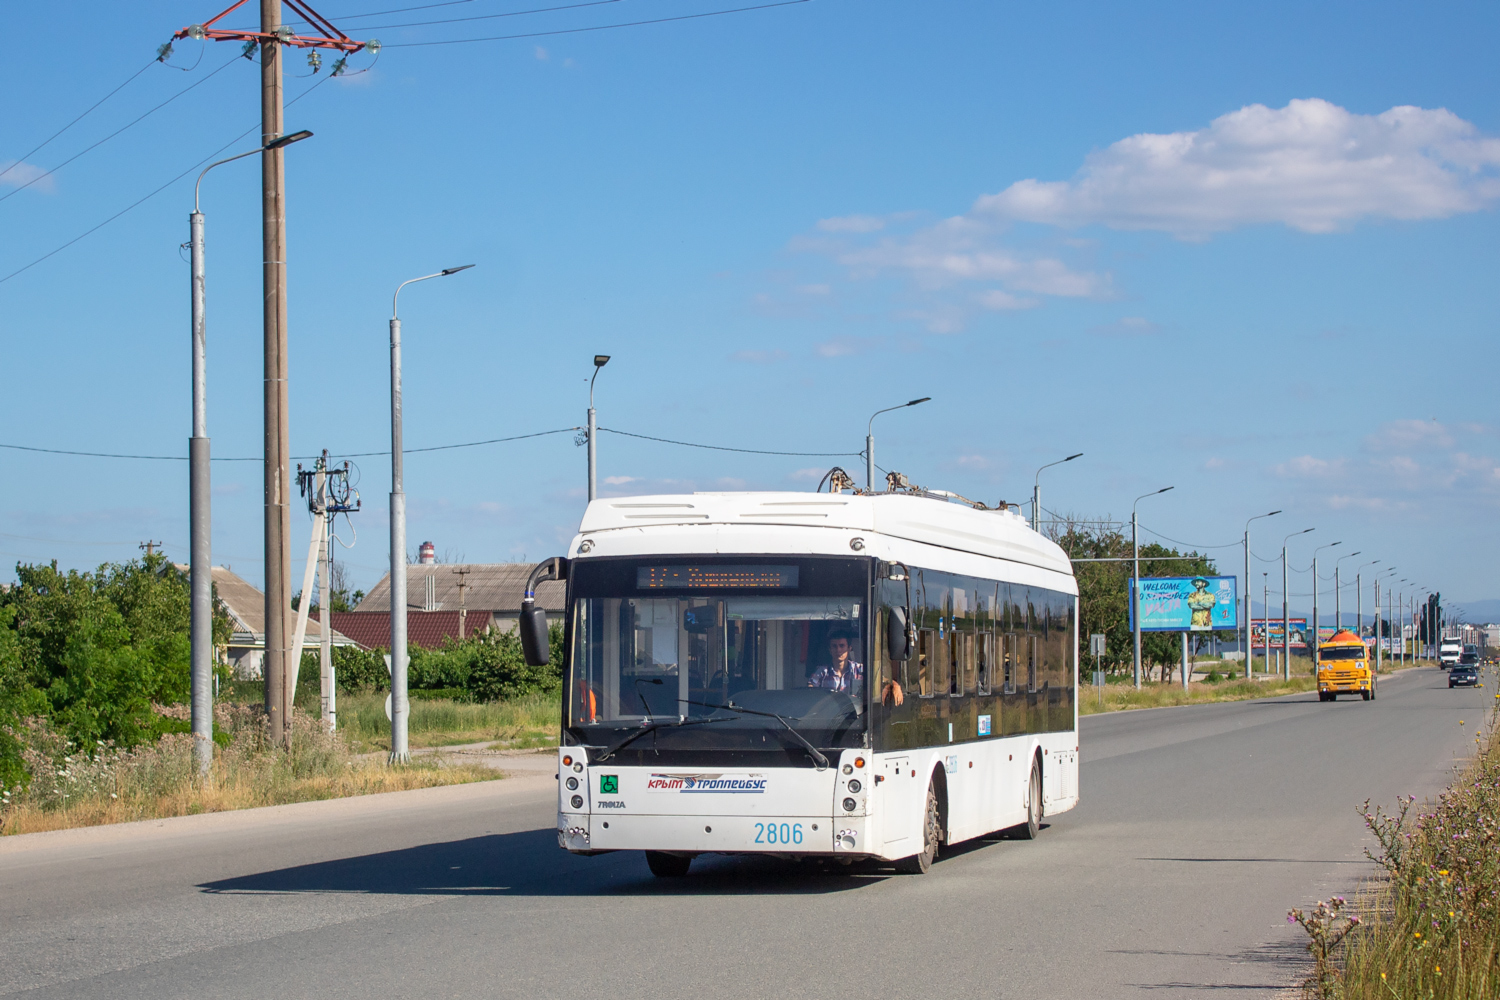 Krymski trolejbus, Trolza-5265.03 “Megapolis” Nr 2806; Krymski trolejbus — The movement of trolleybuses without CS (autonomous running).